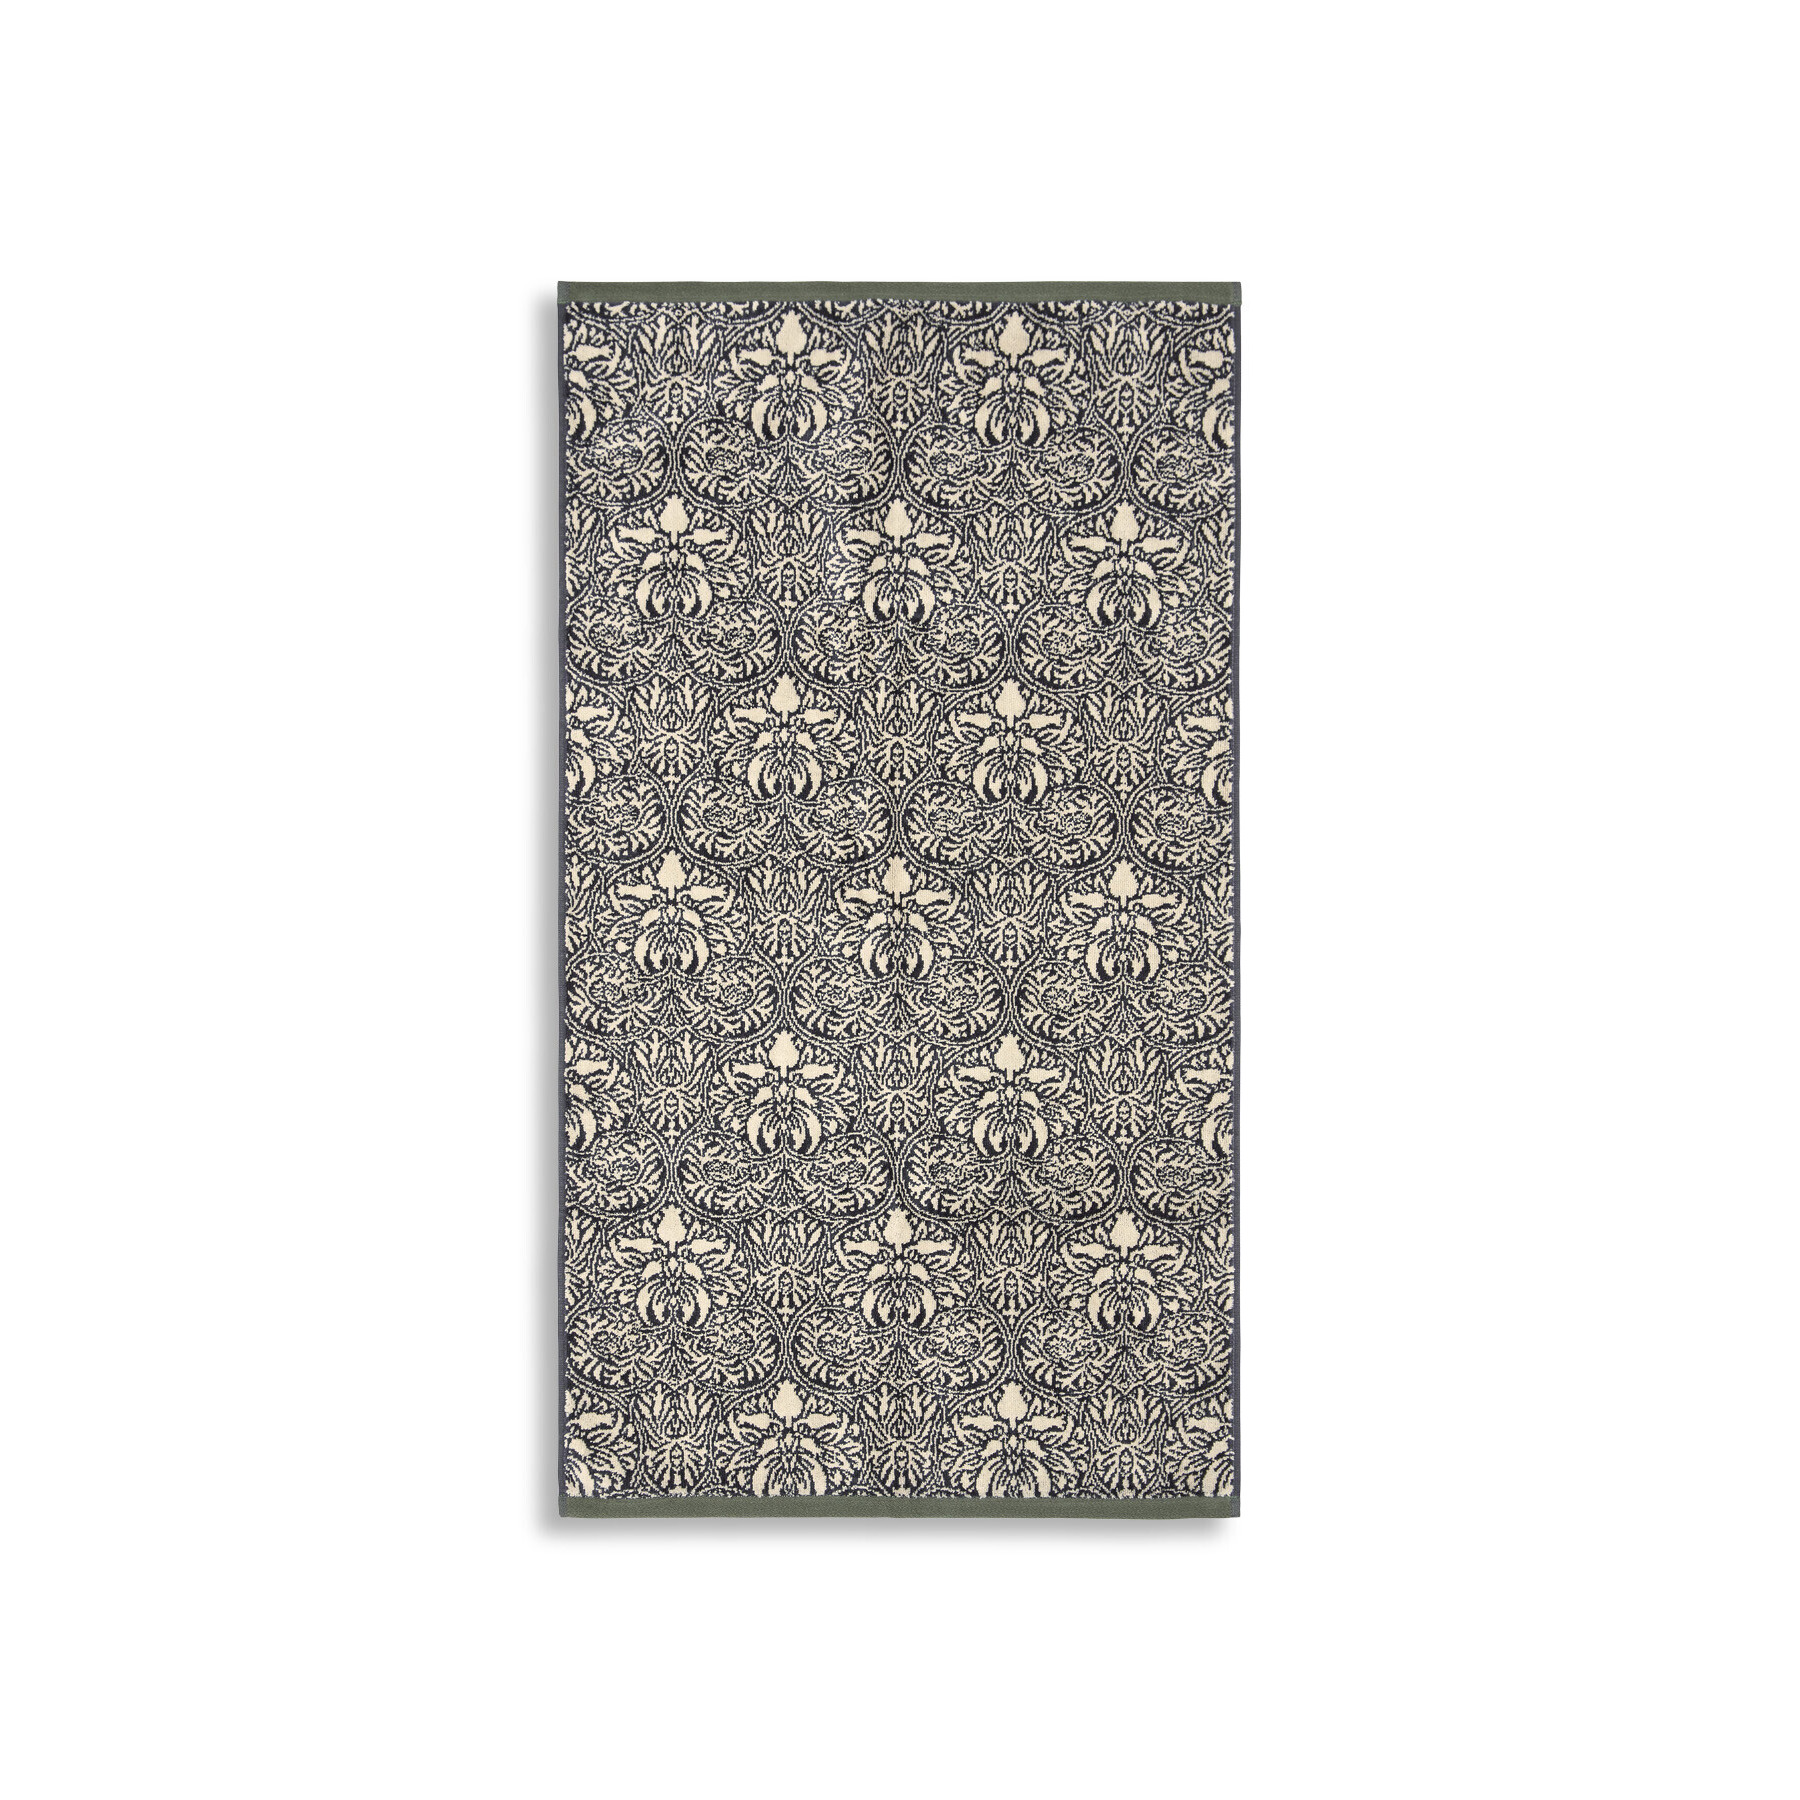 Morris & Co Crown Imperial Bath Sheet Charcoal Grey - image 1